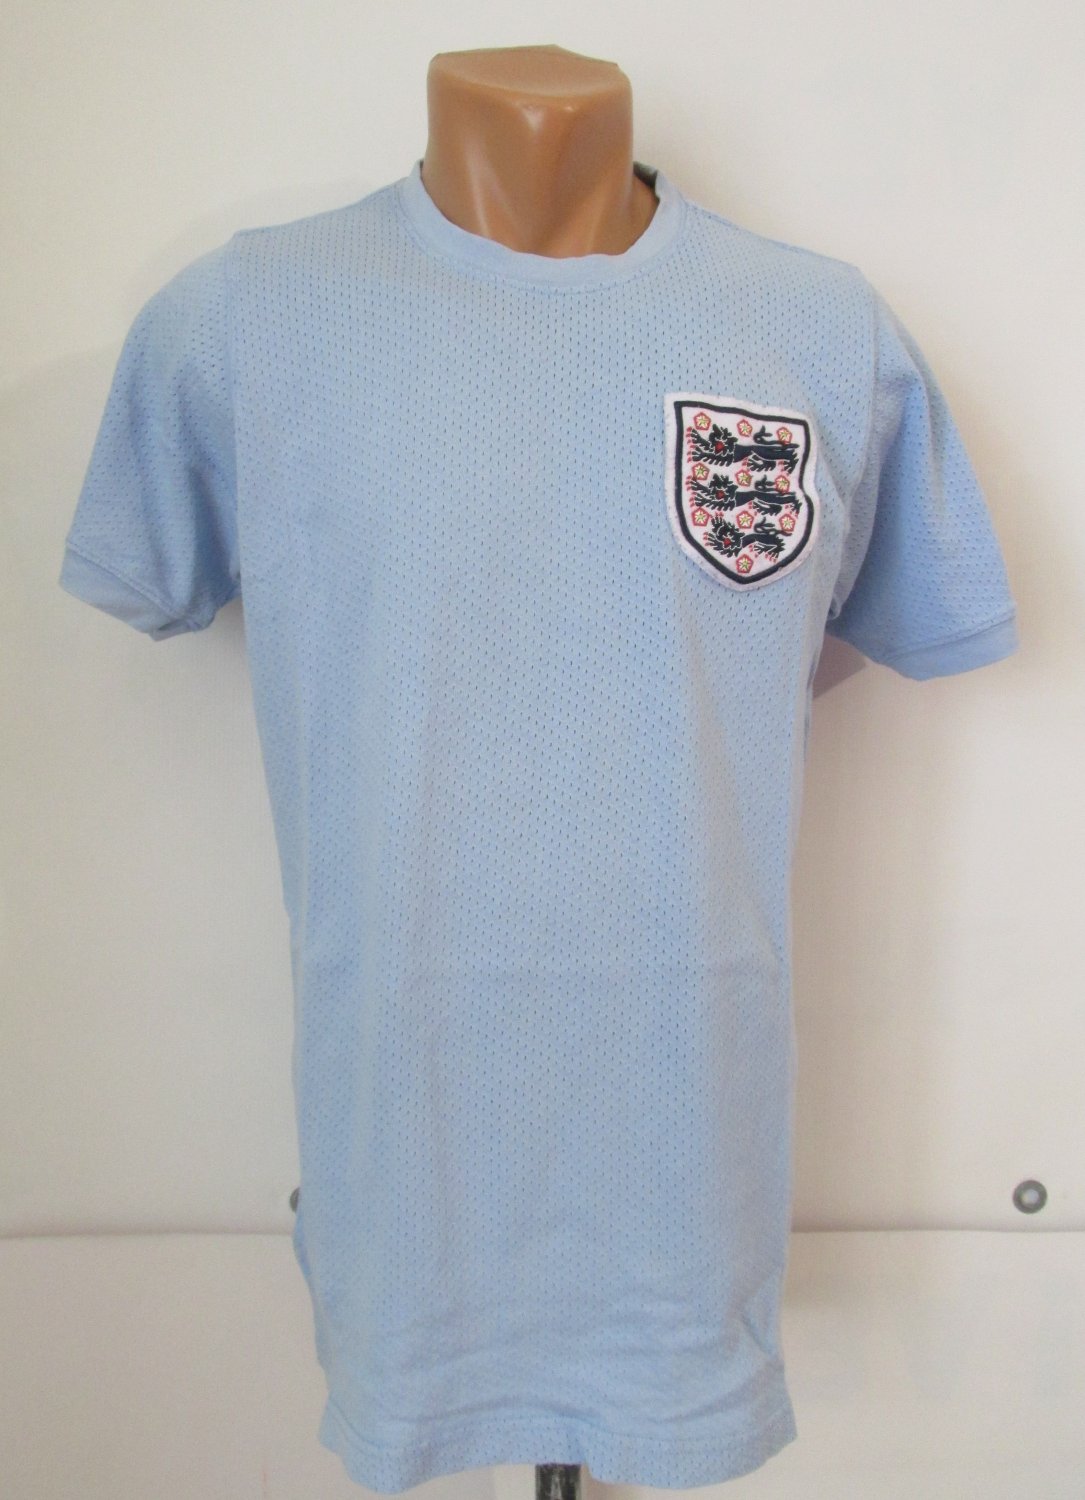 Sale > replica england shirt > in stock